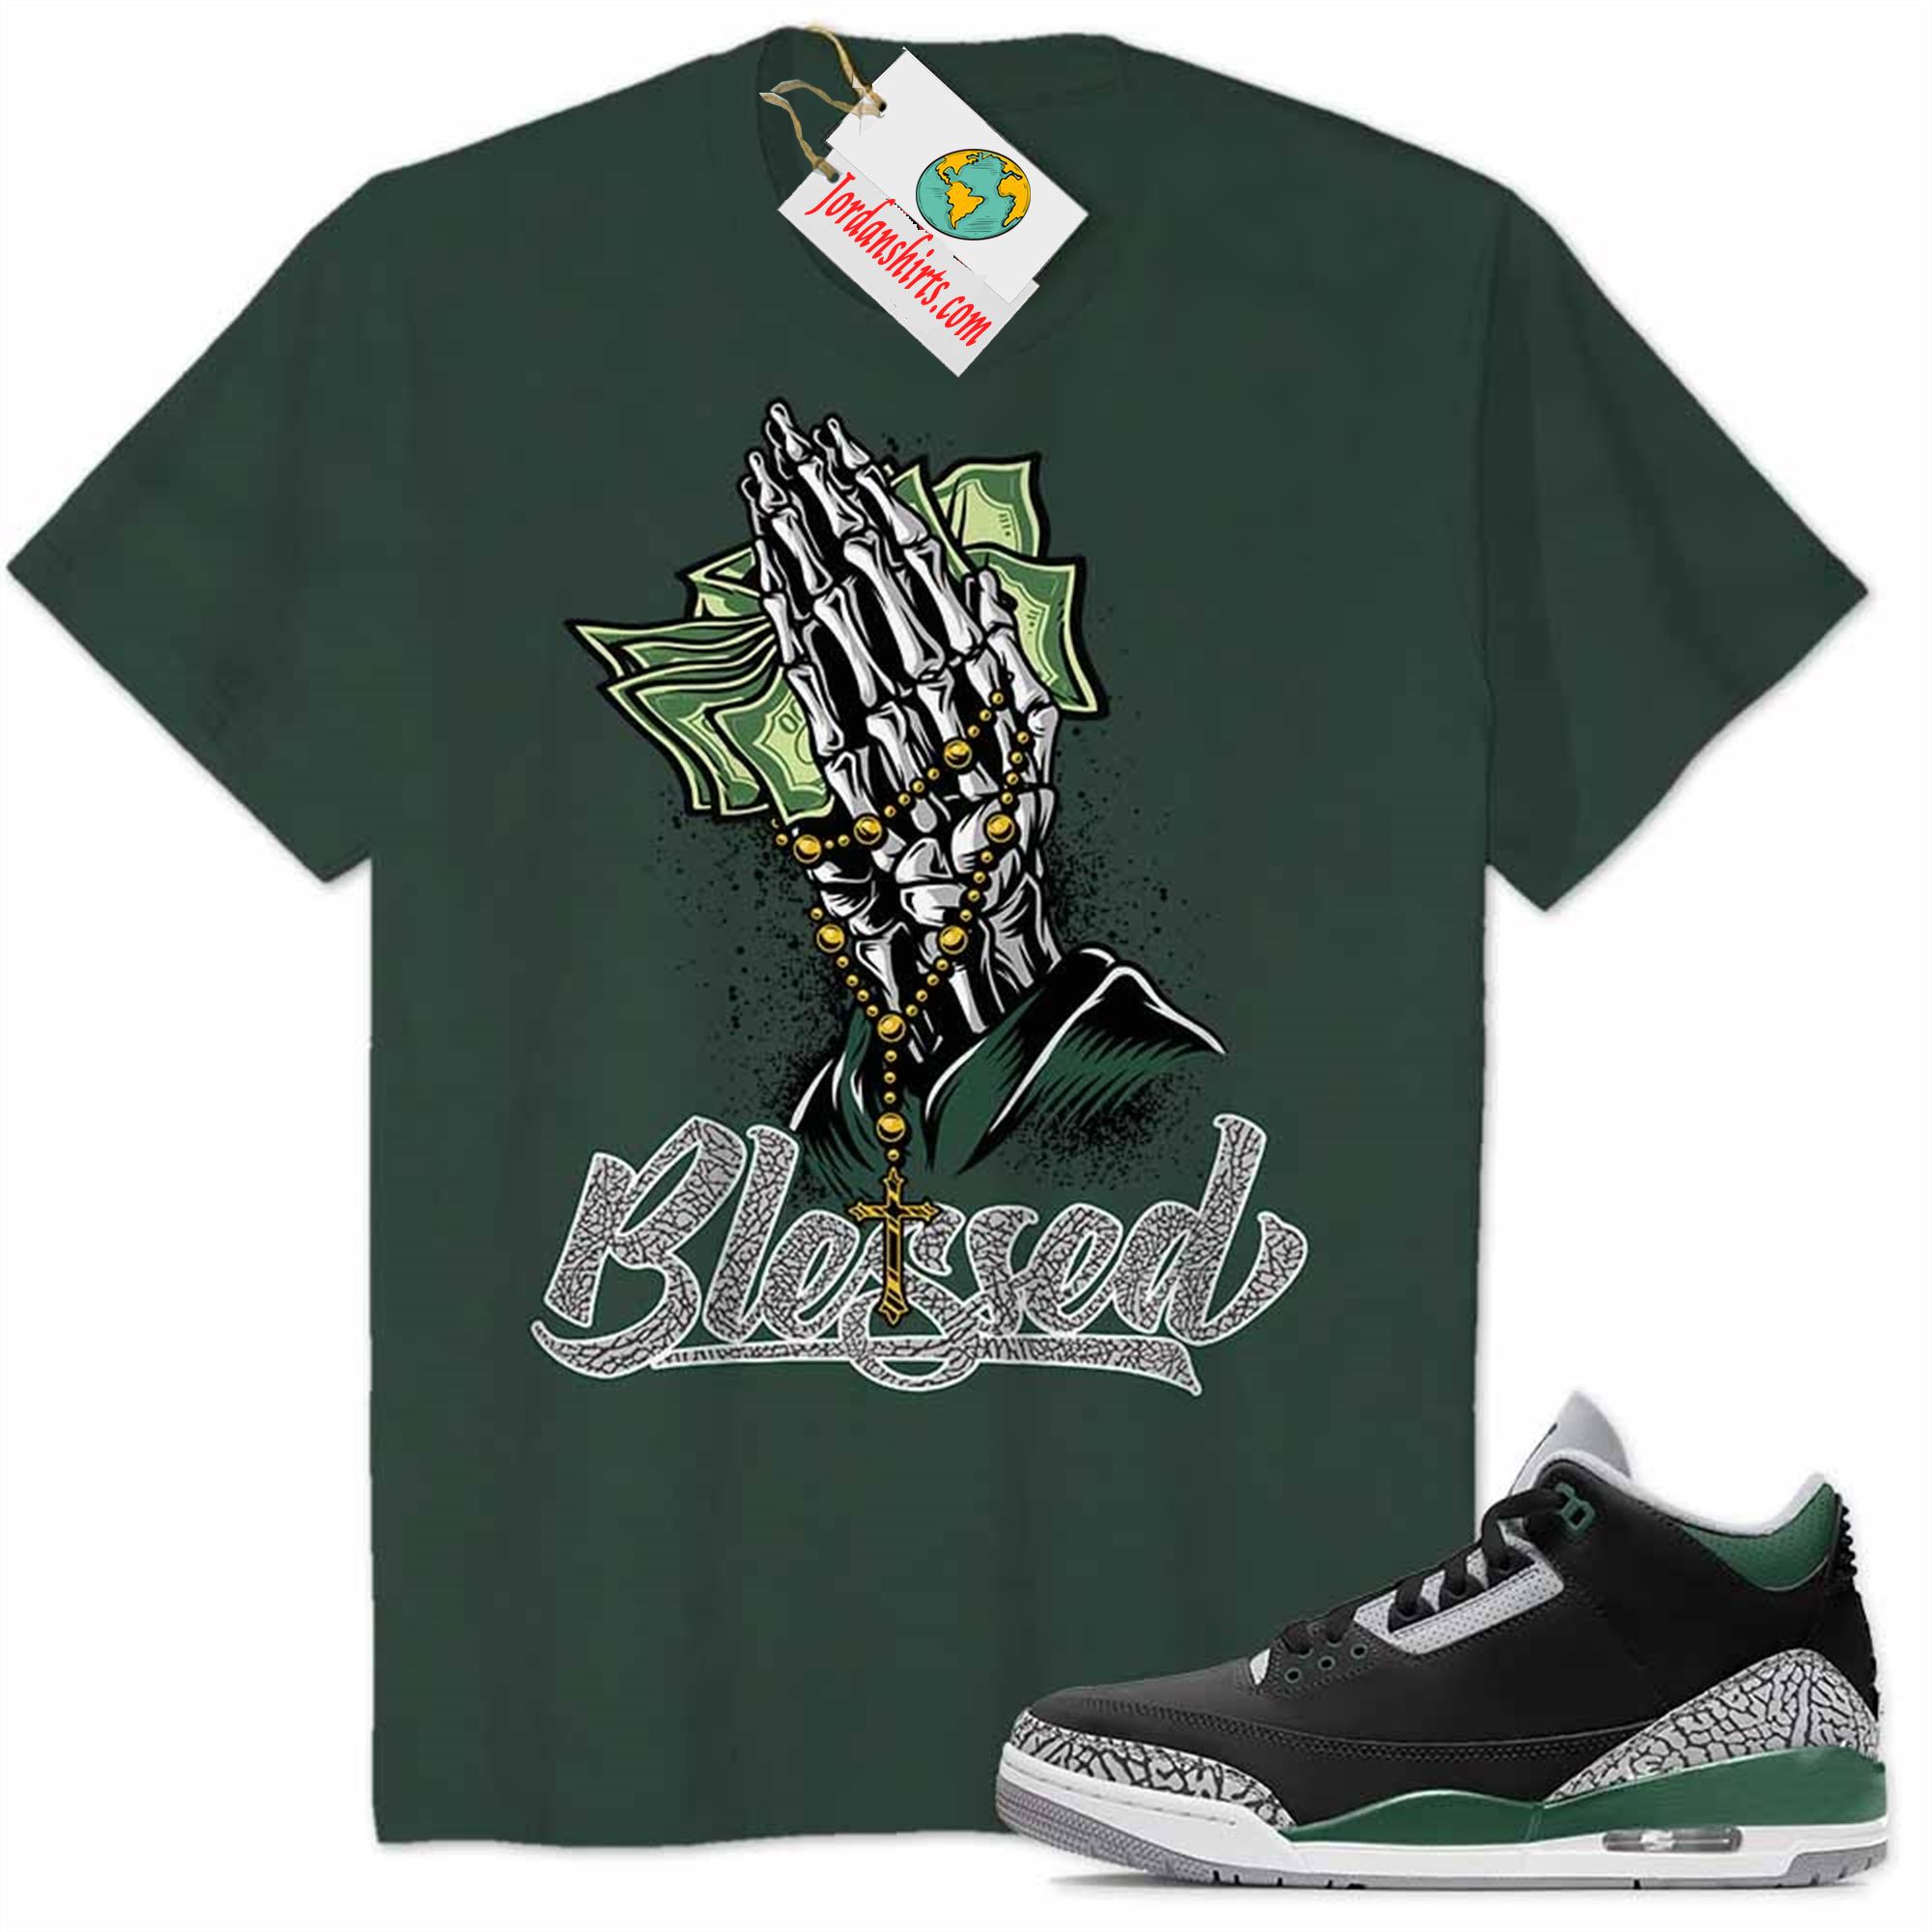 Jordan 3 Shirt, Blessed Pray Hand Money Forest Air Jordan 3 Pine Green 3s Full Size Up To 5xl